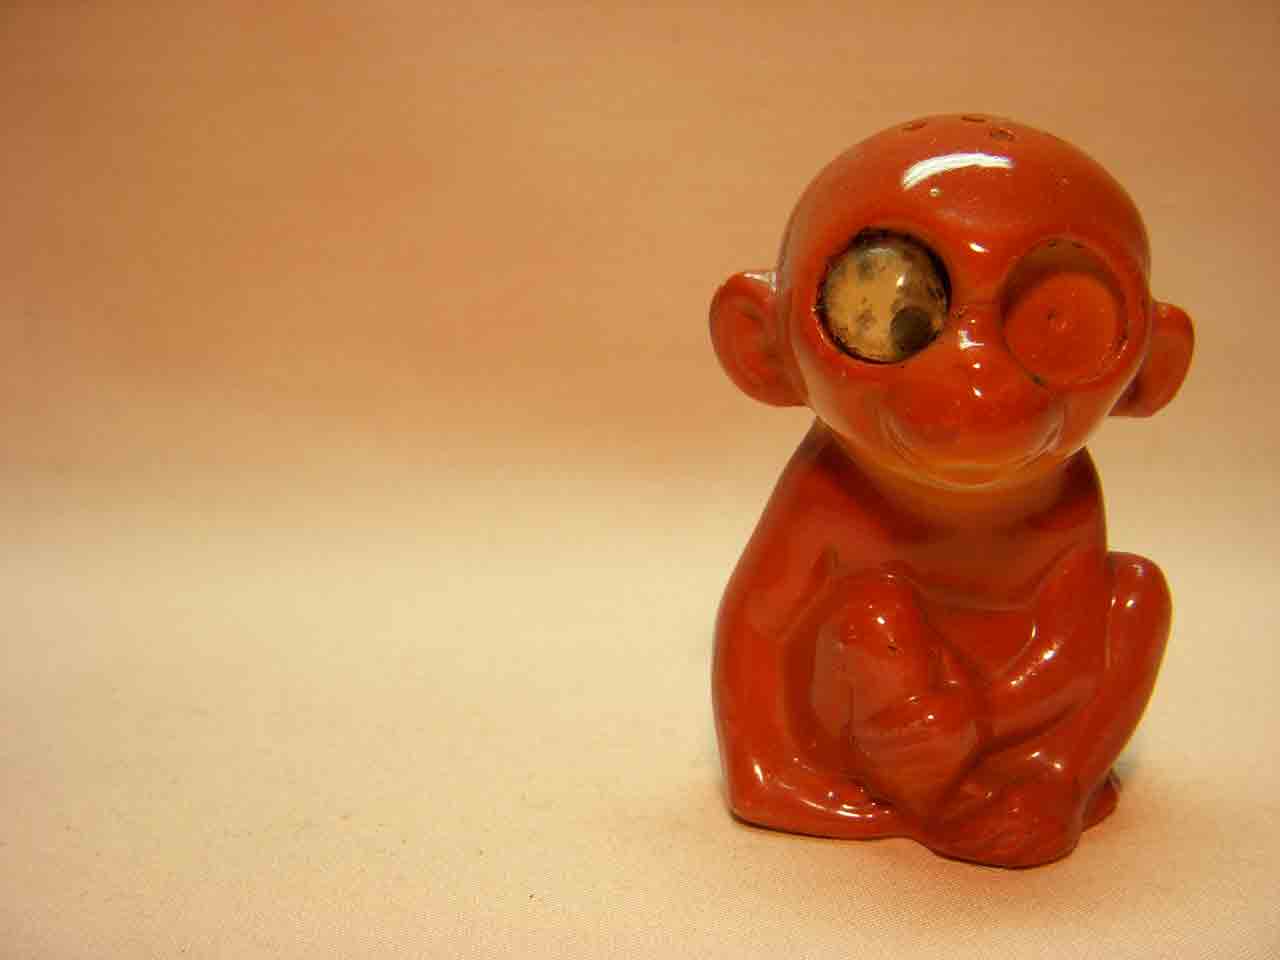 Germany google-eyed animal salt and pepper shakers - monkey